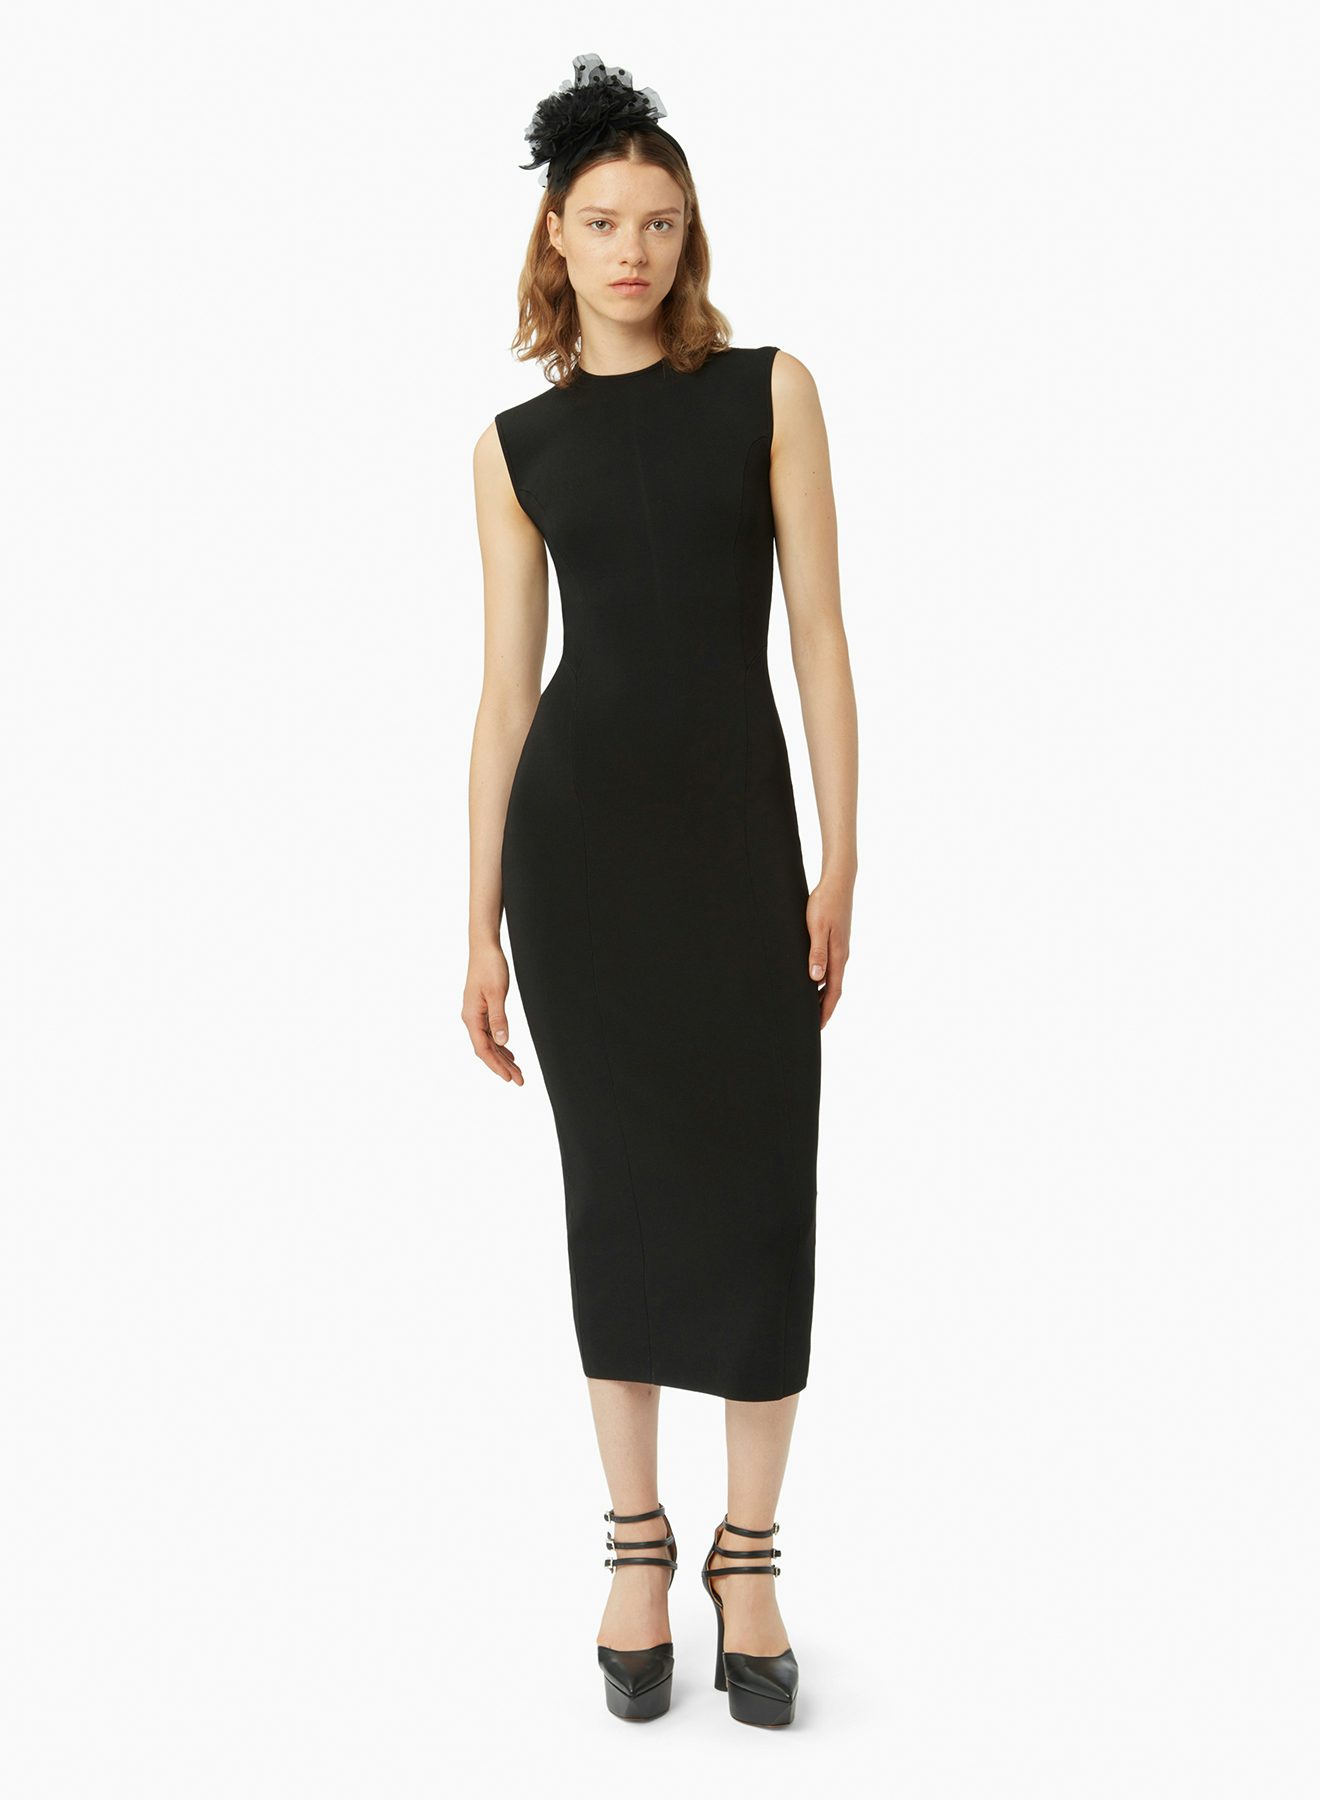 Long sleeveless dress in black - Nina Ricci